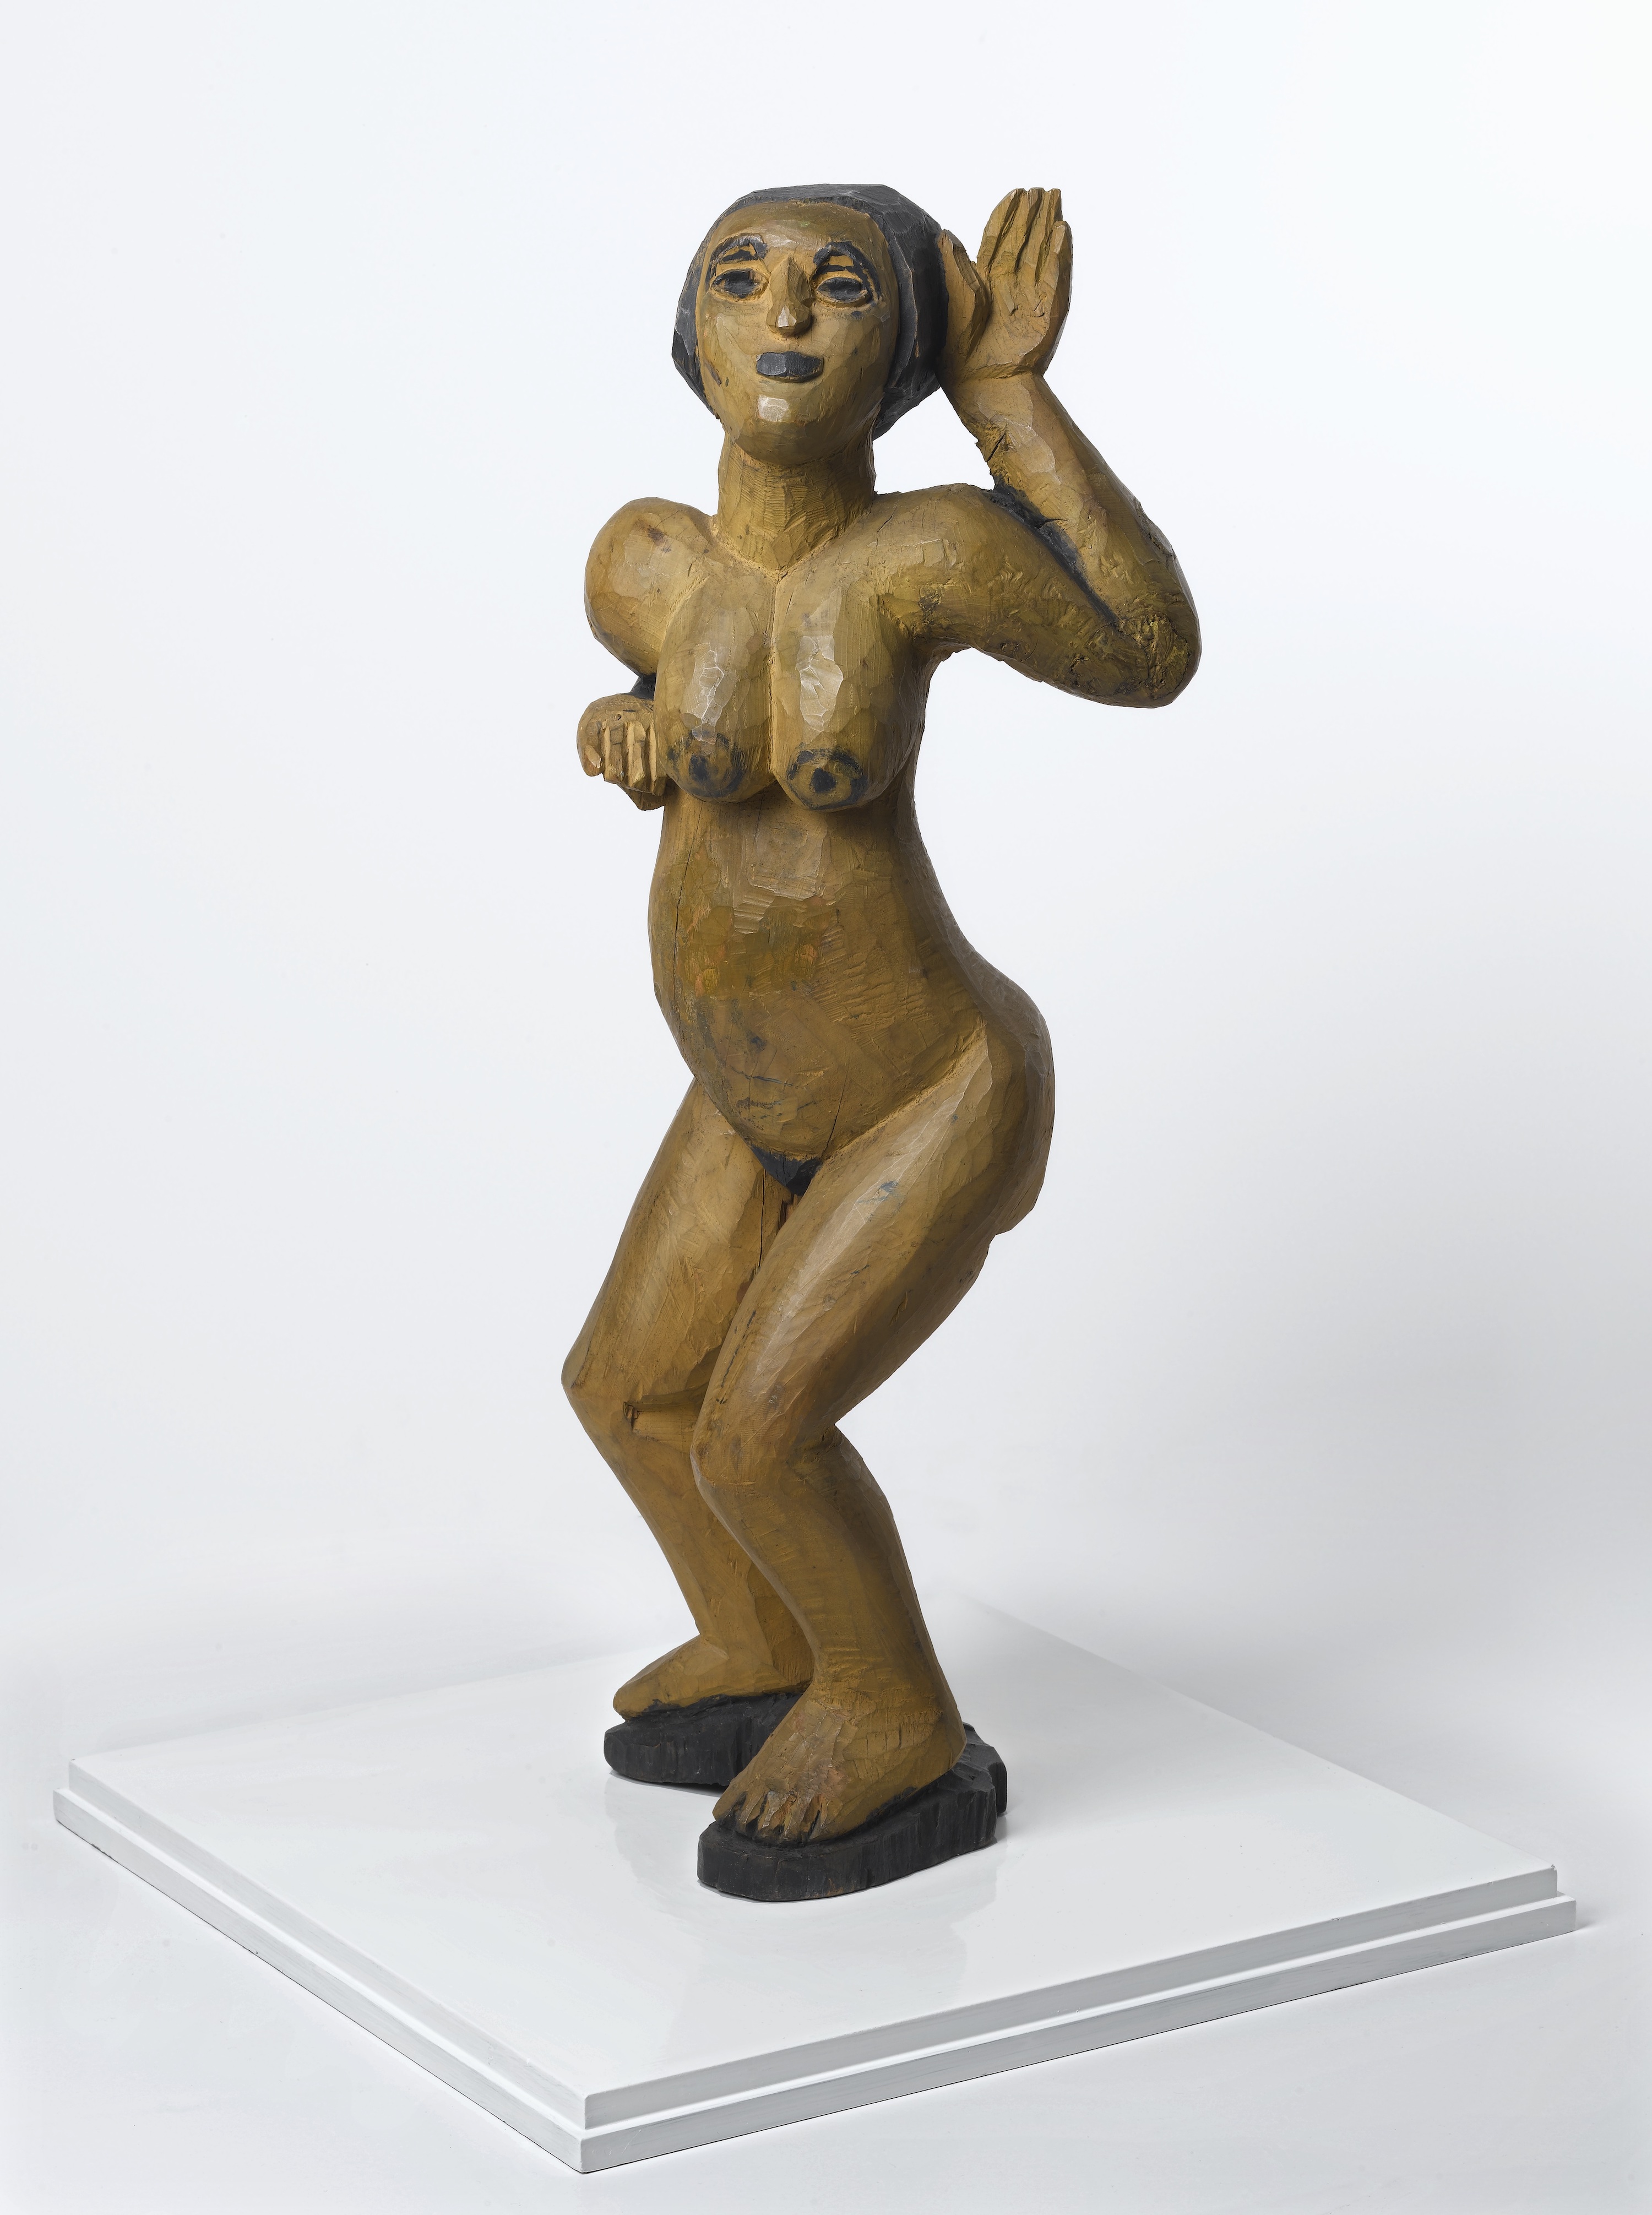 Tanzende (Dancing Woman) by Ernst Ludwig Kirchner - 1911 - 87 x 35.5 x 27.5 cm Stedelijk Museum